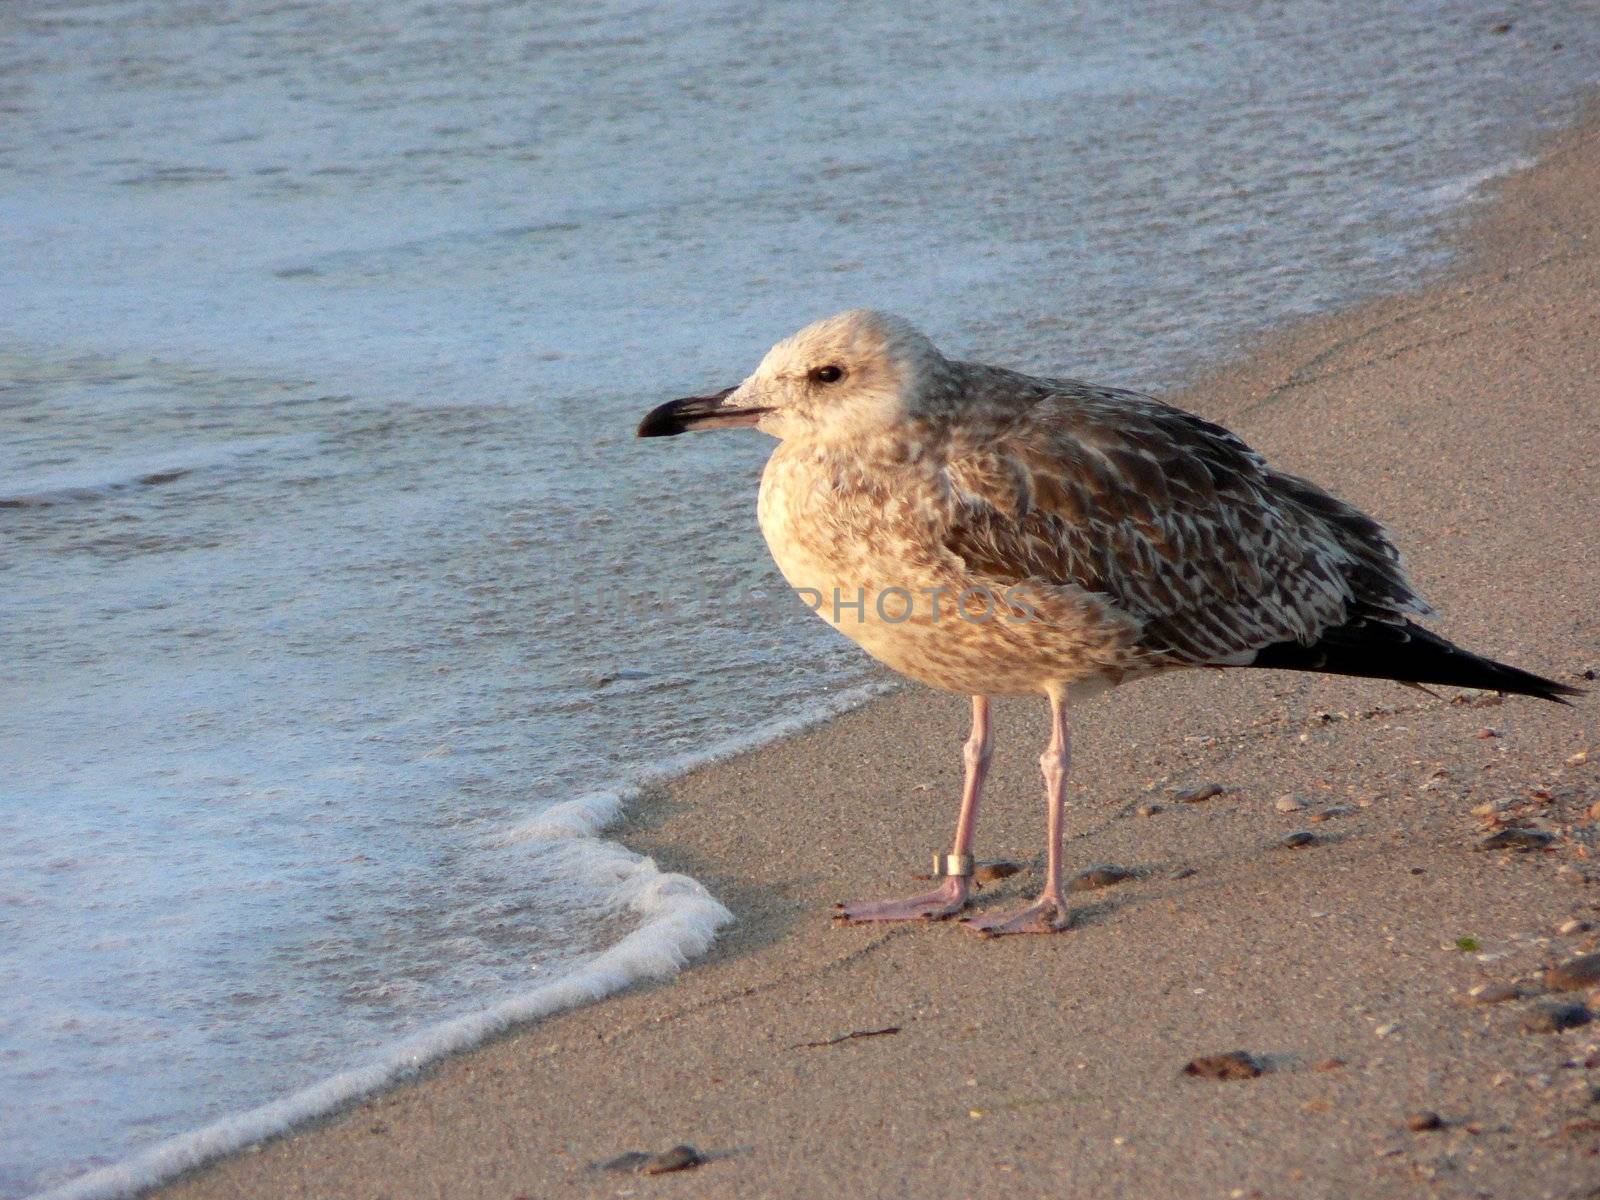 The seagull on the seashore